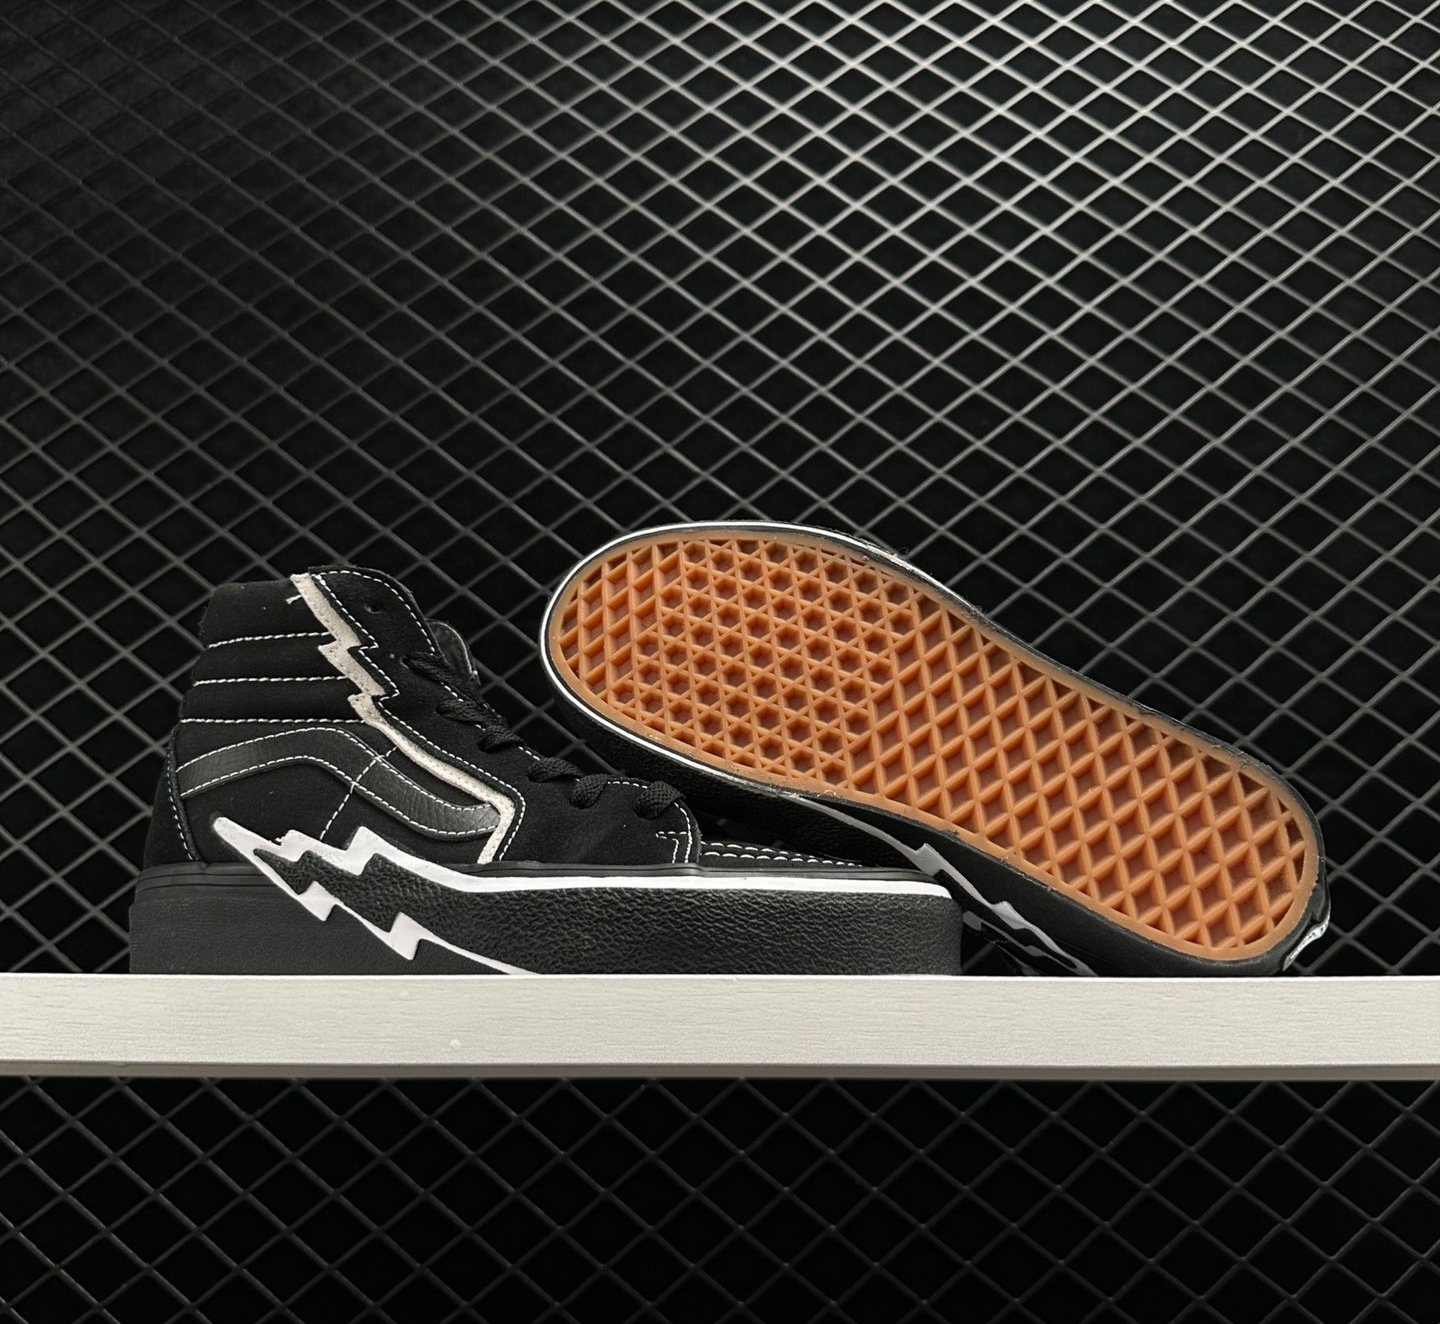 Vans SK8-HI 'Bolt - Black' VN0A5JIVBKA | Stylish and edgy high-top sneakers